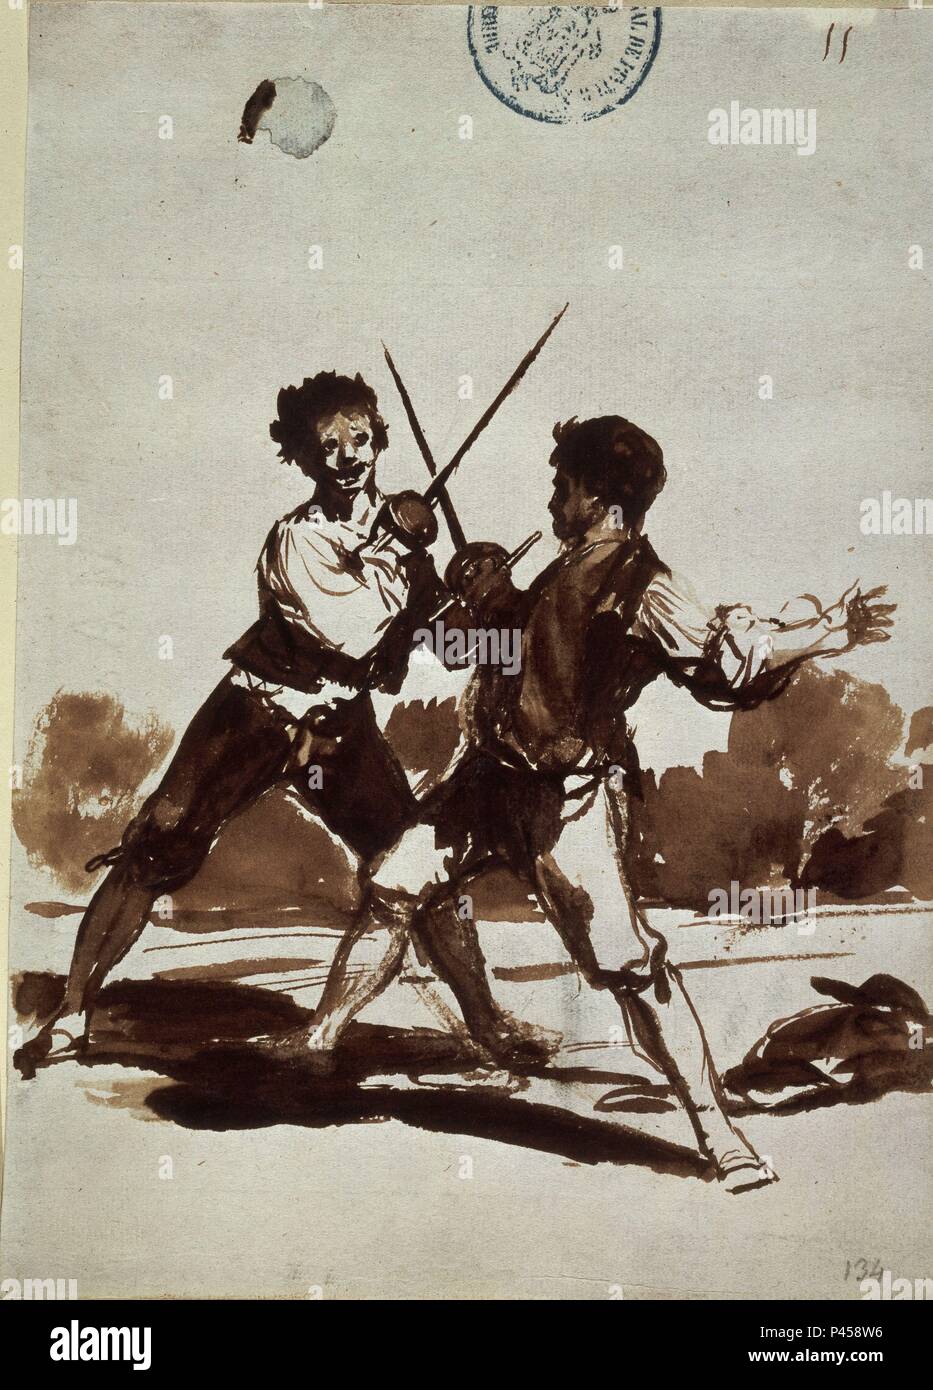 Spanish school. Challenge...on guard. Desafio...en guardia. Drawing. Madrid, Prado museum. Author: Francisco de Goya (1746-1828). Location: MUSEO DEL PRADO-DIBUJOS, MADRID, SPAIN. Stock Photo